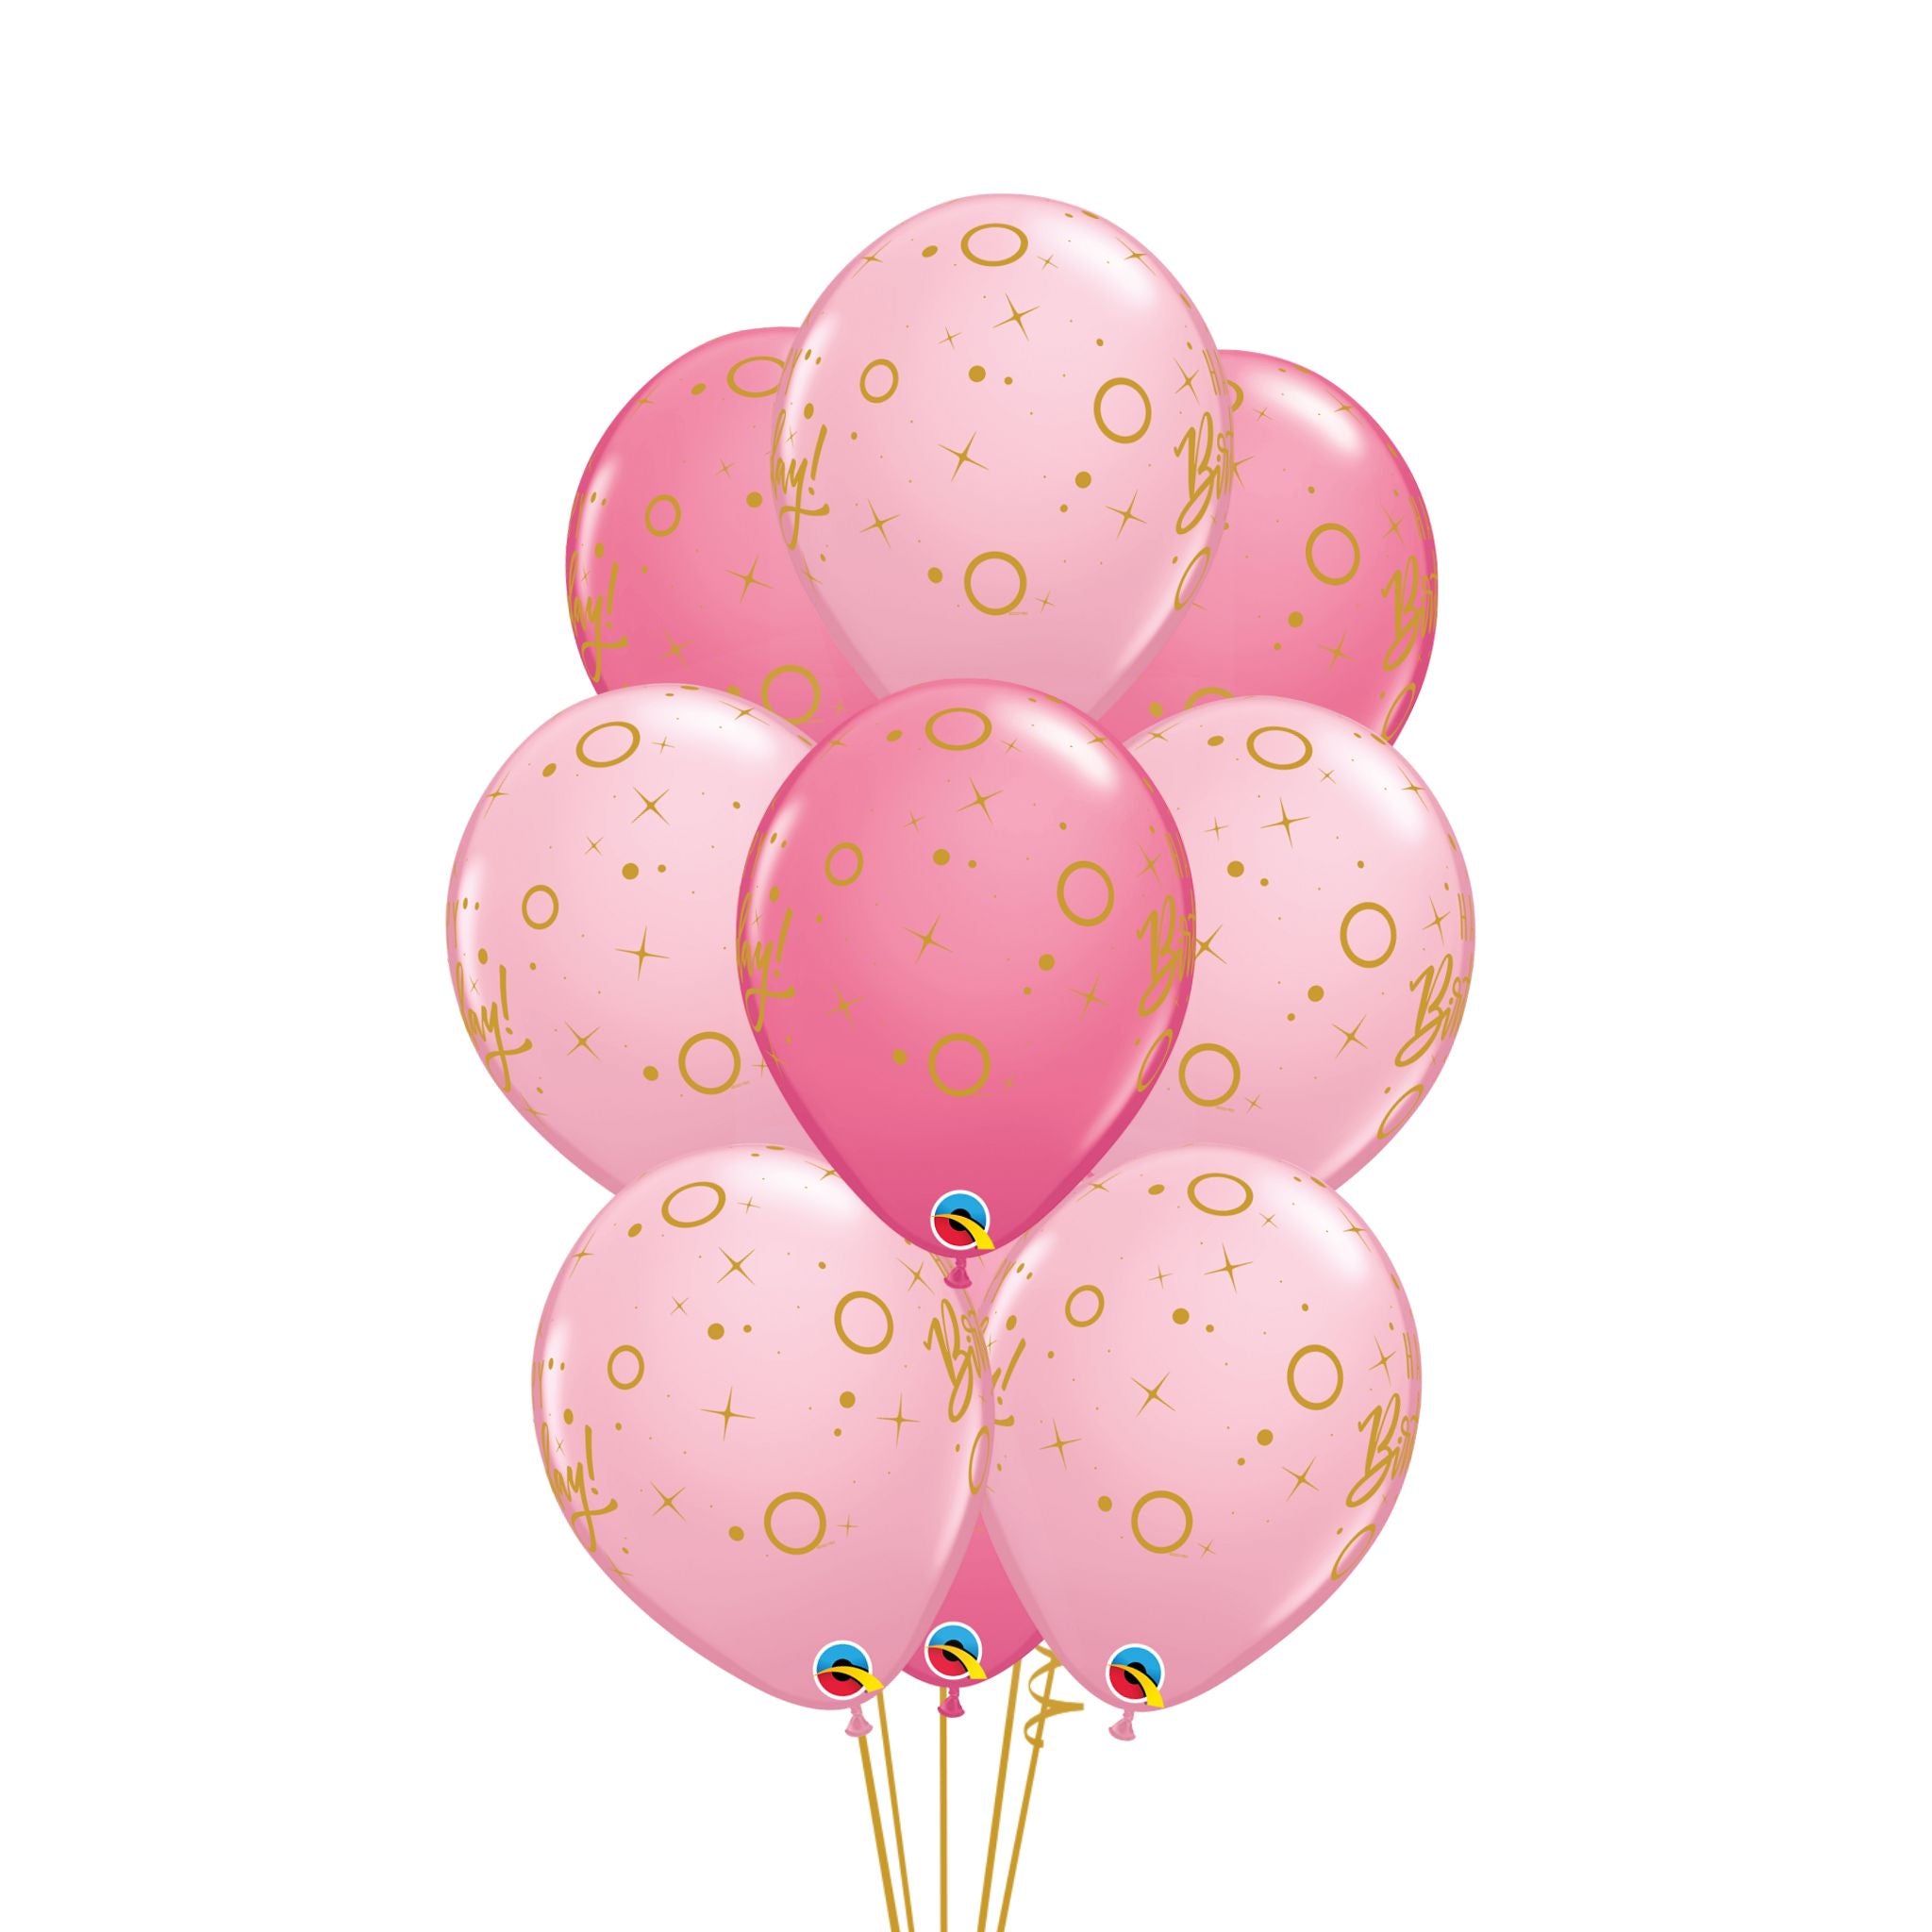 9 Latex Balloon Bouquet